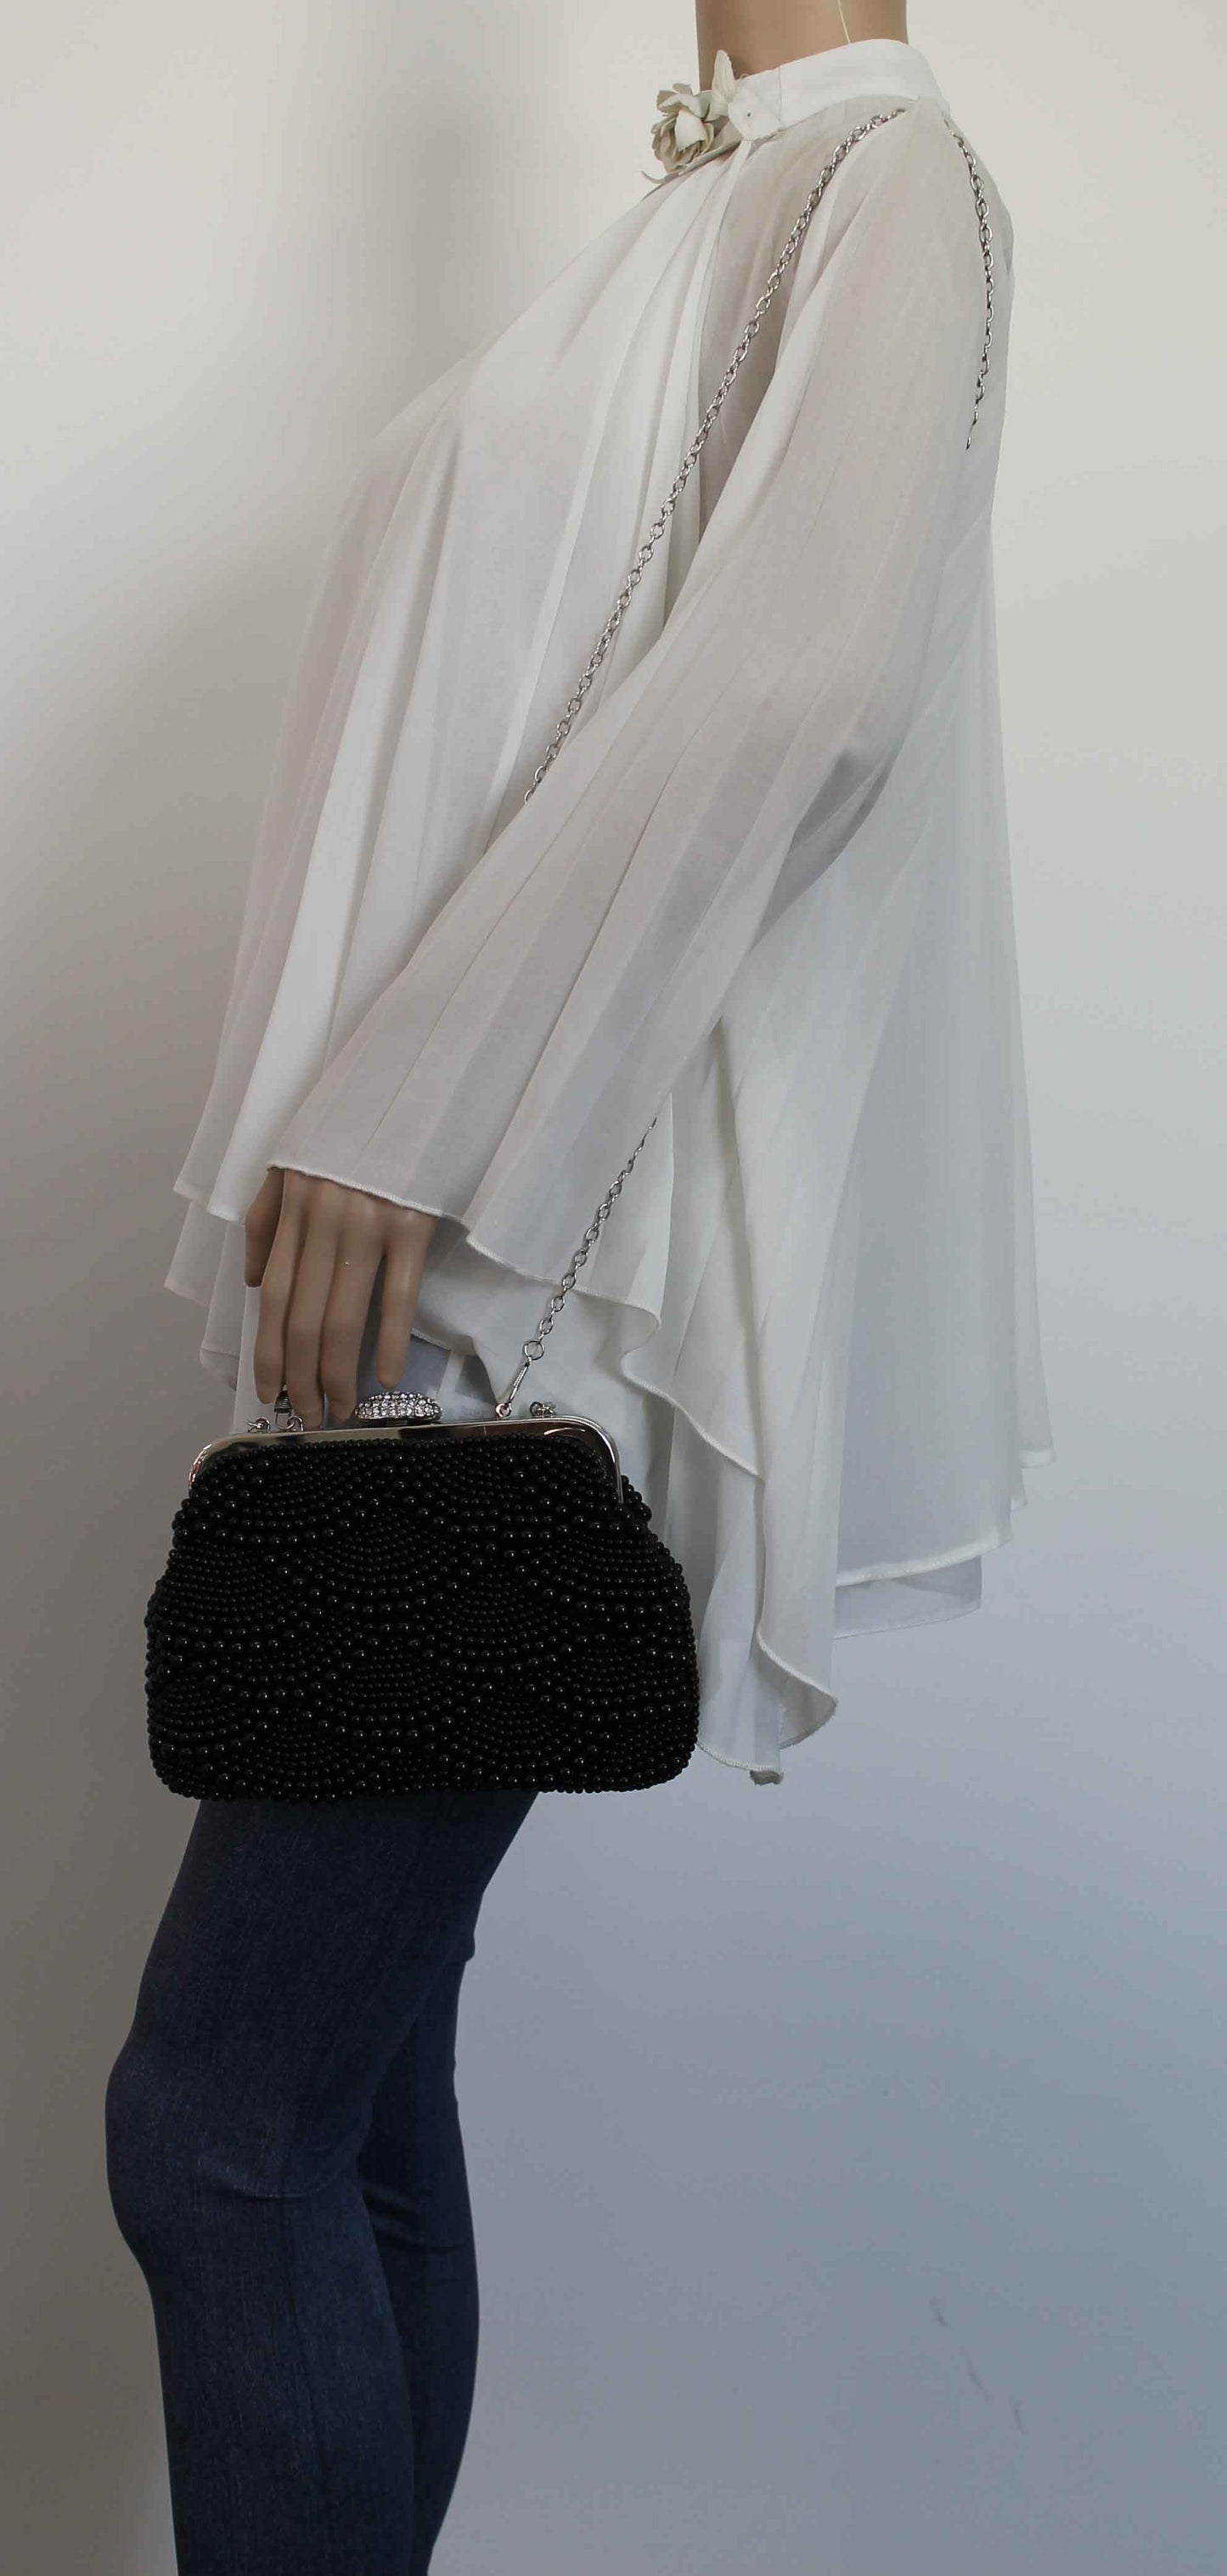 SWANKYSWANS Hailee Faux Pearl Detail Clutch Bag Black Cute Cheap Clutch Bag For Weddings School and Work